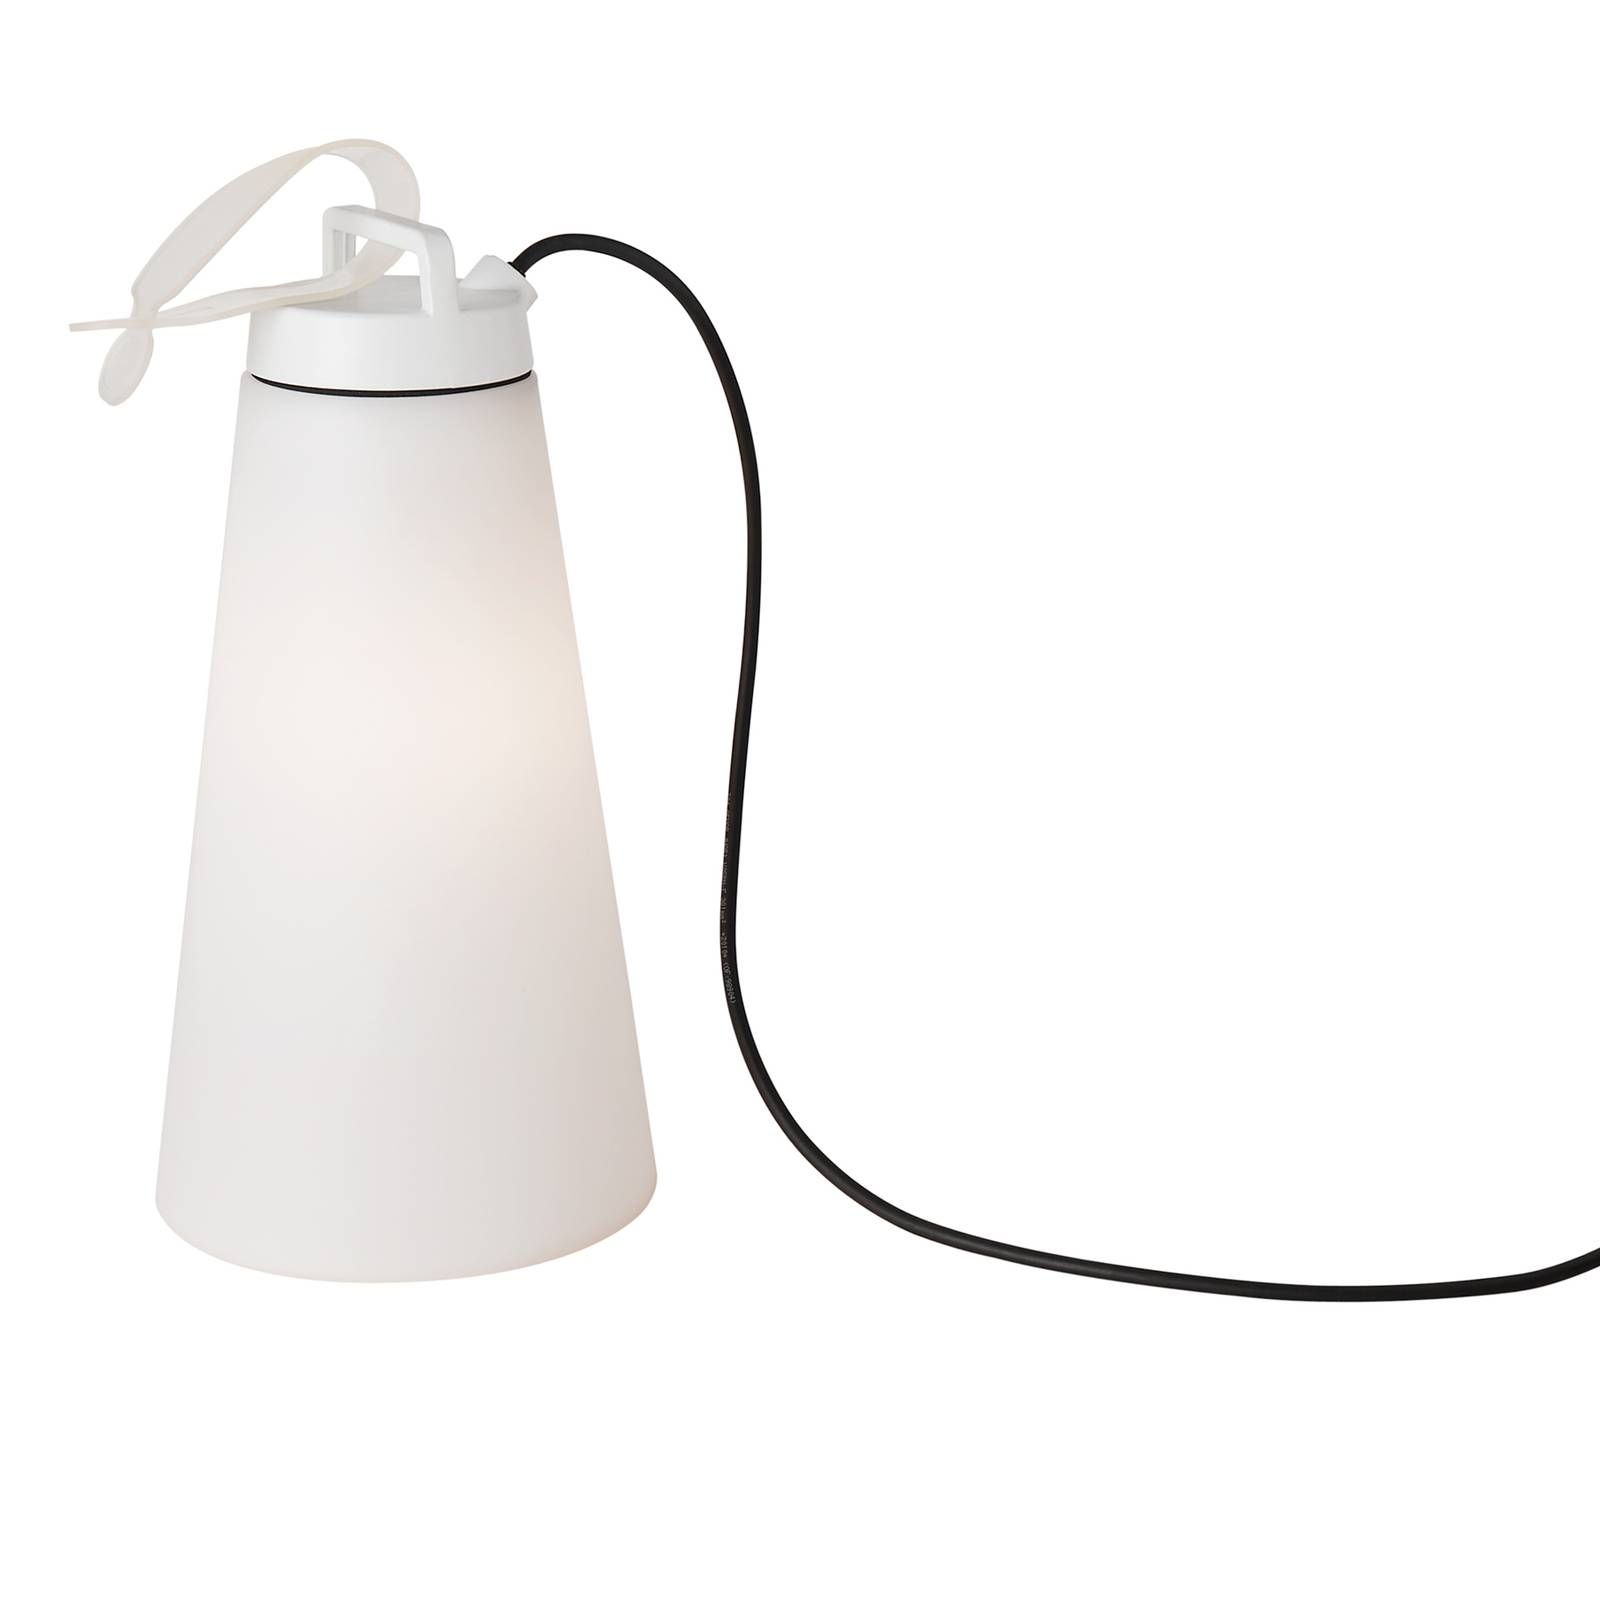 Carpyen LED svietidlo Sasha, kábel, výška 41 cm, biela, hliník, polyetylén, silikón, E27, 11W, K: 41cm